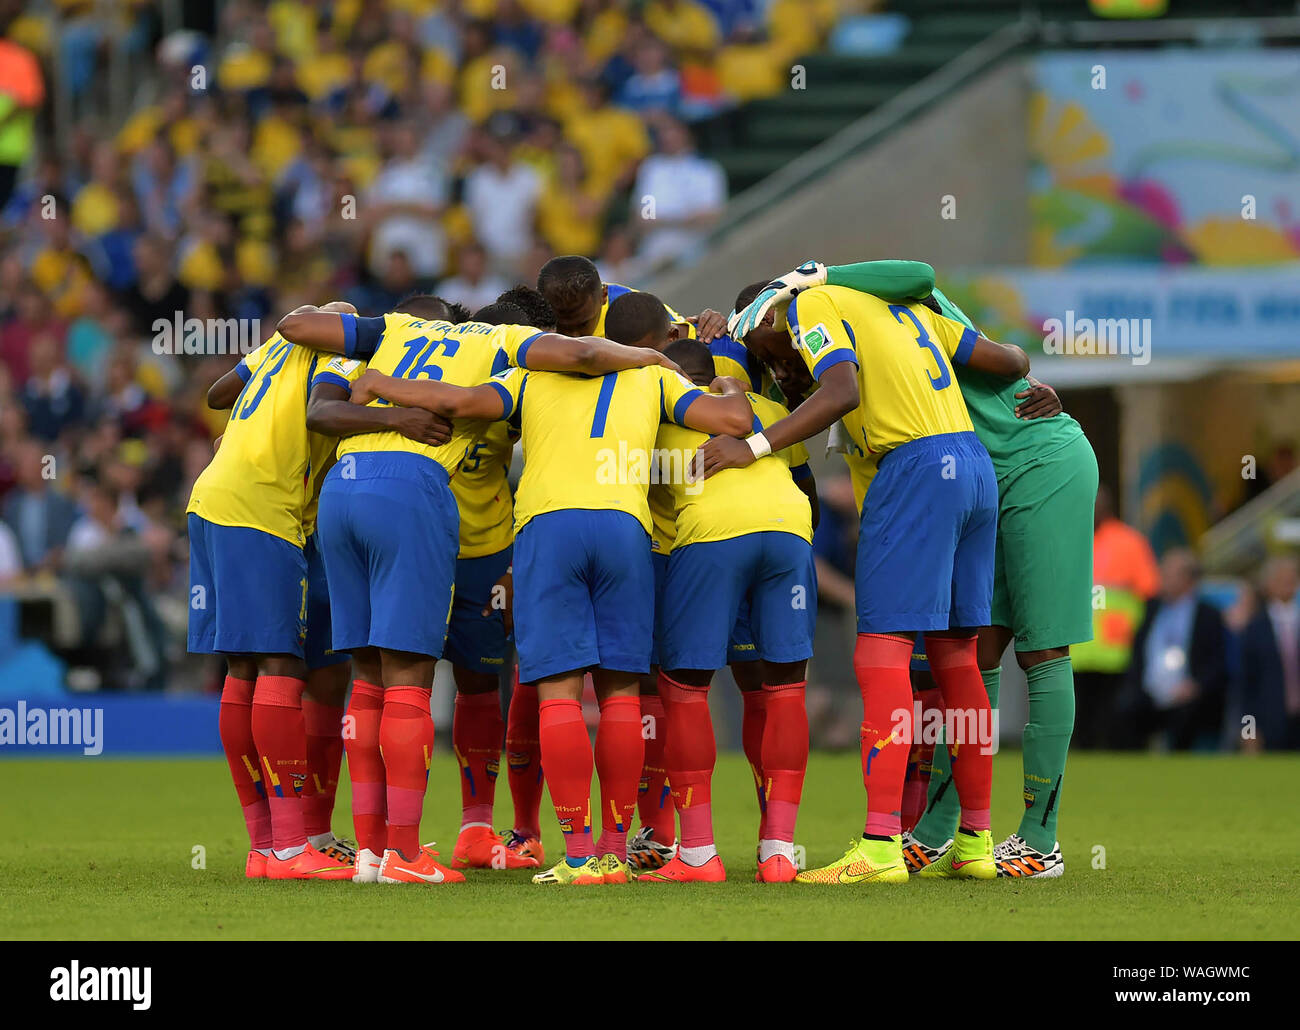 Rio de Janeiro, June 25, 2014. The Ecuadorian soccer players united before the match Ecuador vs France football for the 2014 World Cup at the Maracanã Stock Photo